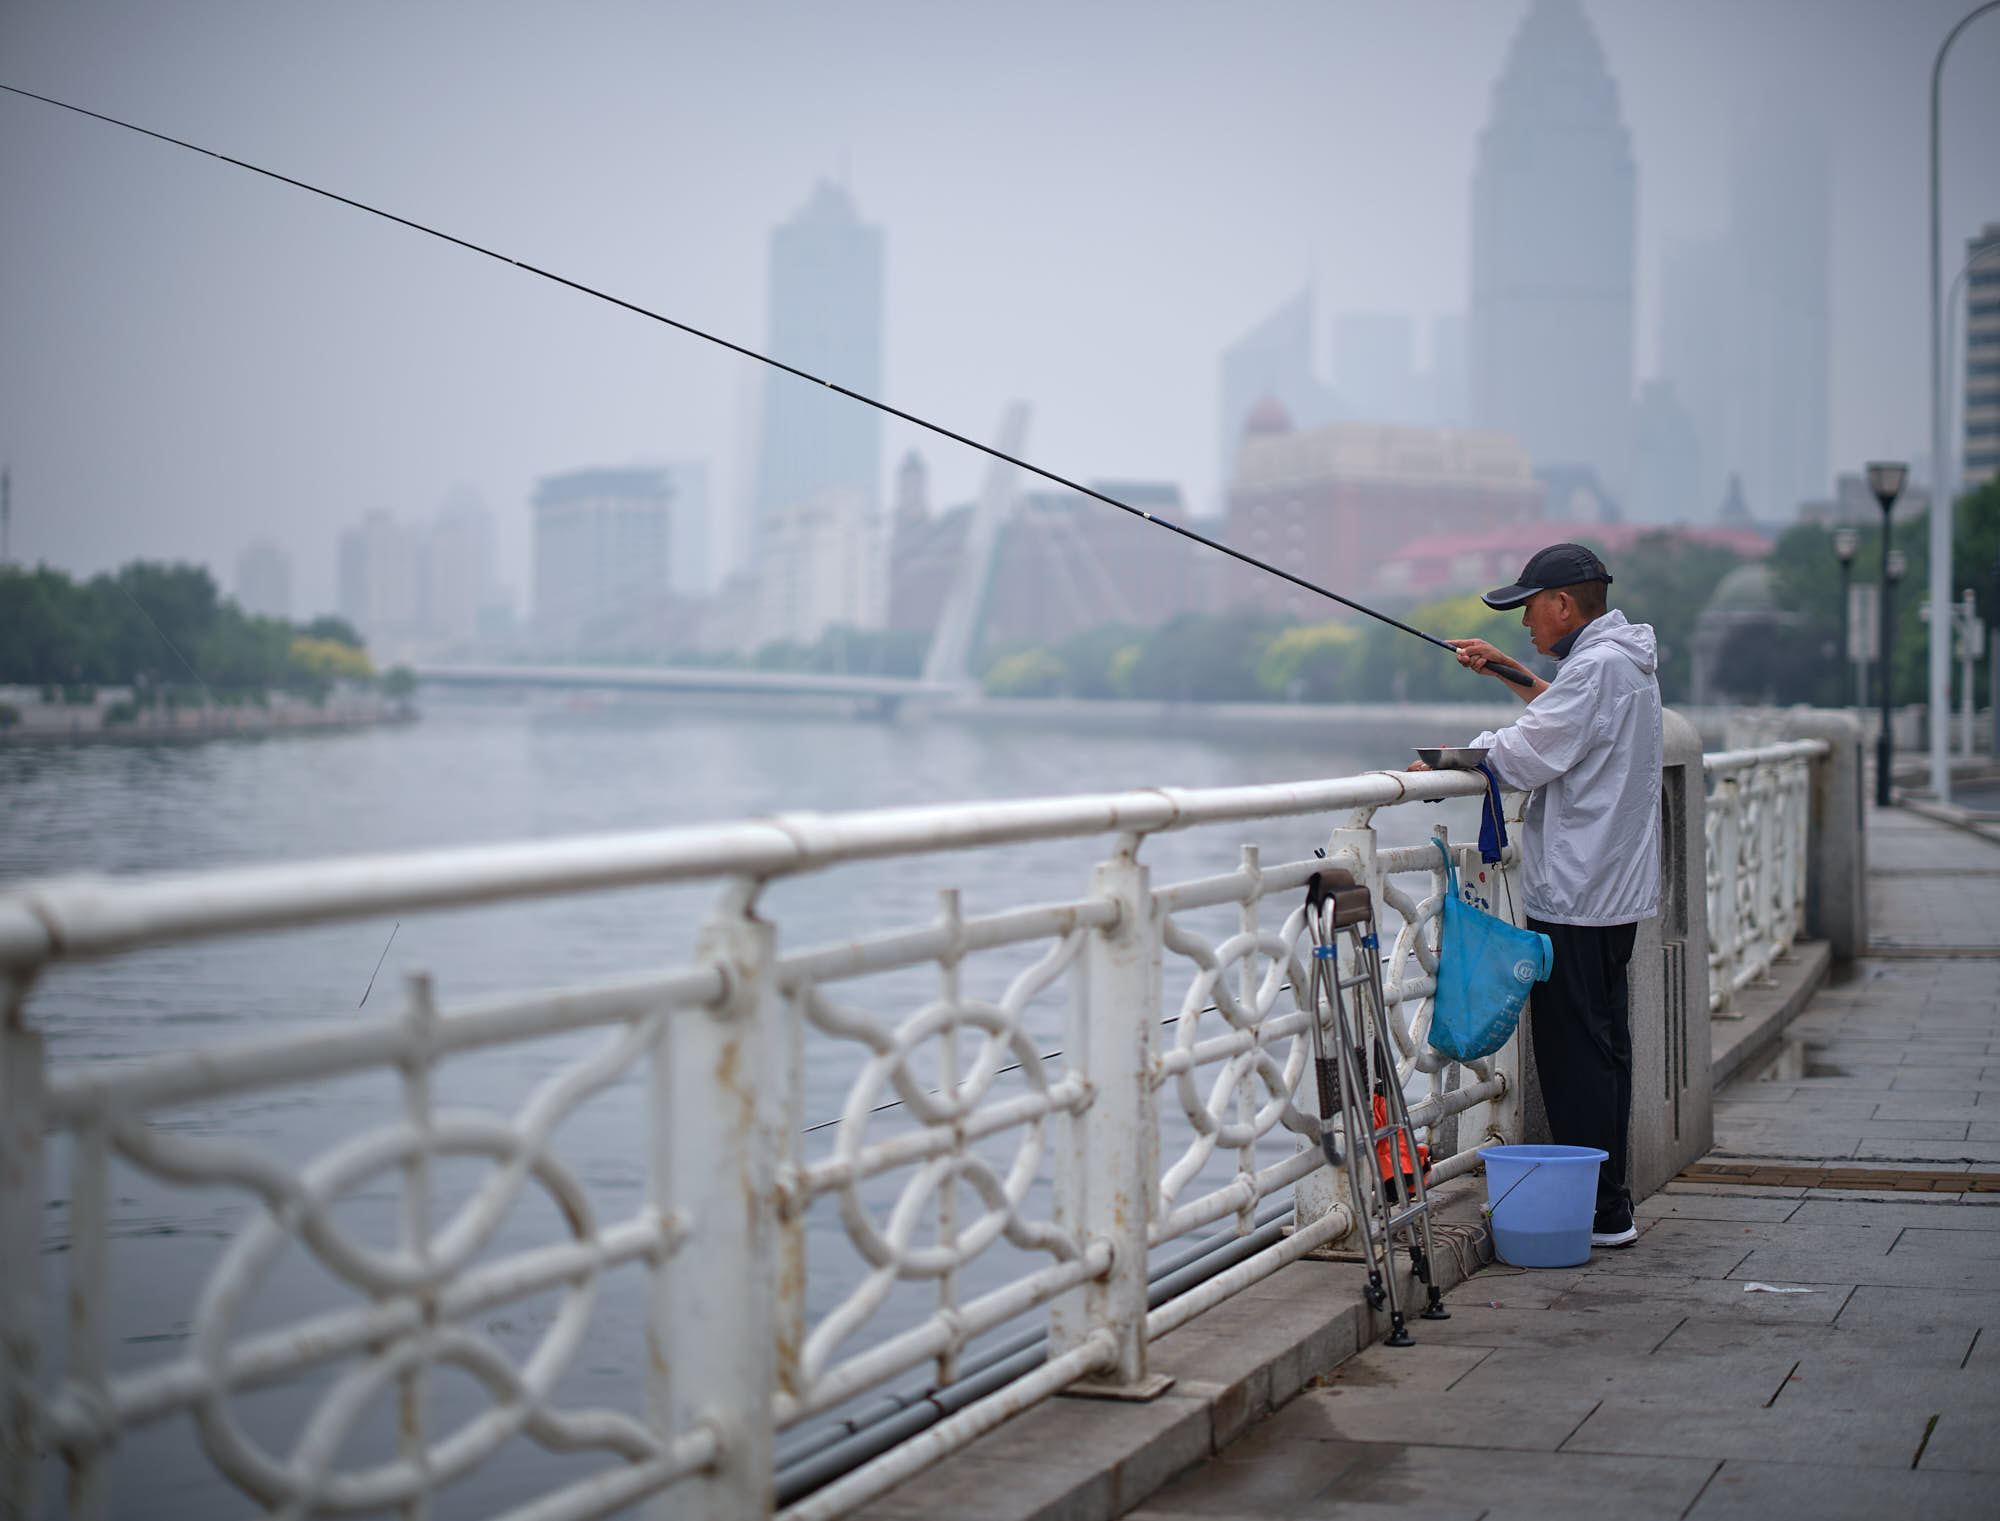 Man fishing at the river in Tianjin, China